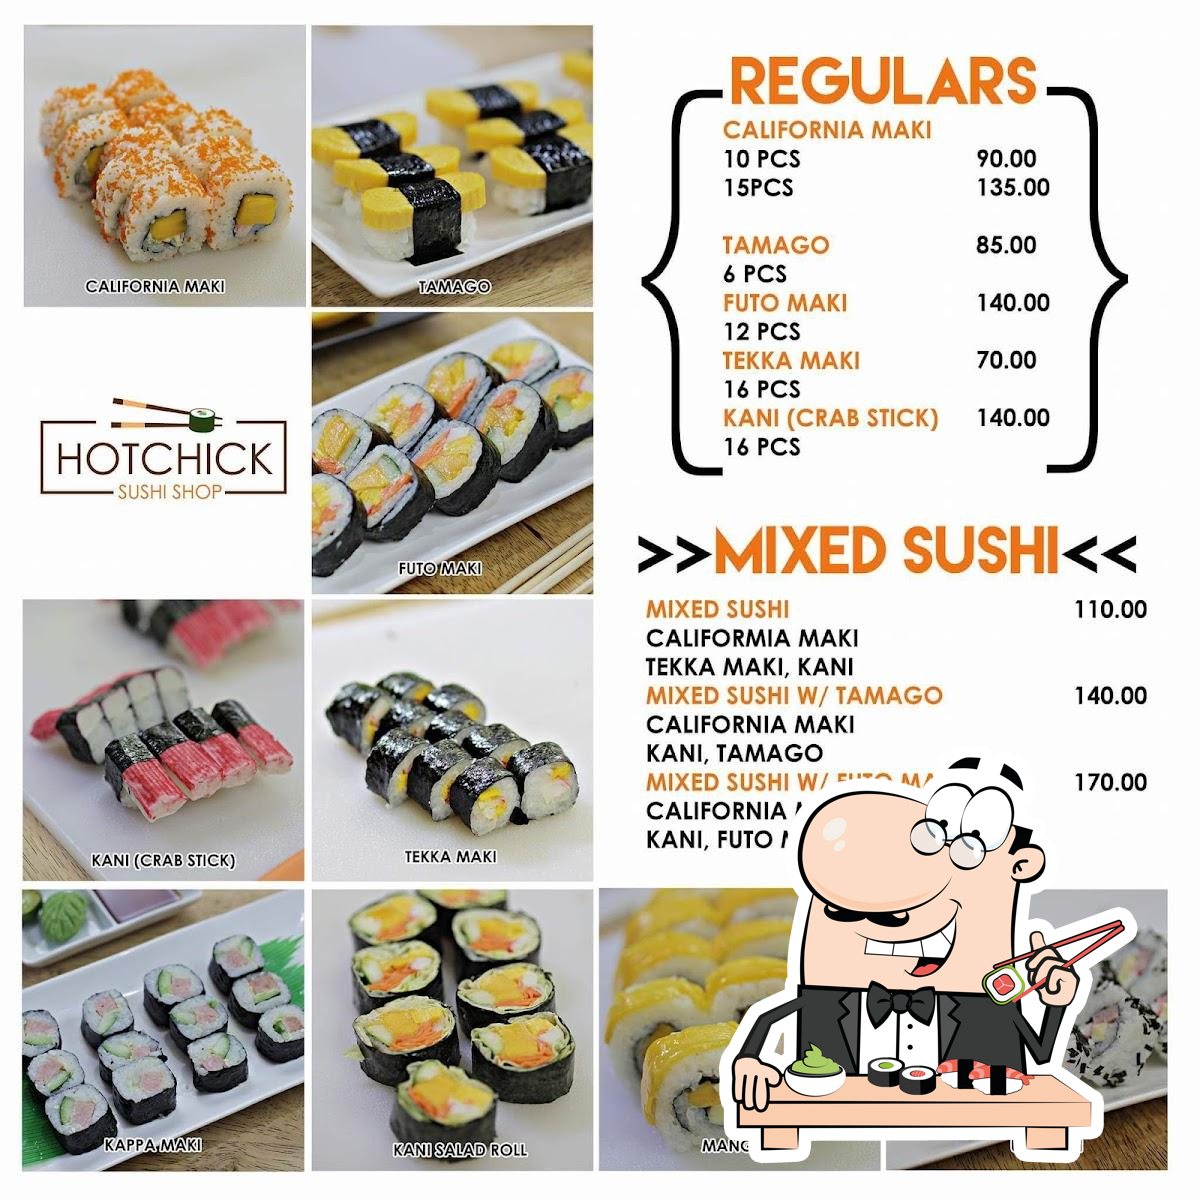 KEEP SAFE AND STAY DRY - Hotchick Sushi Shop Batac City